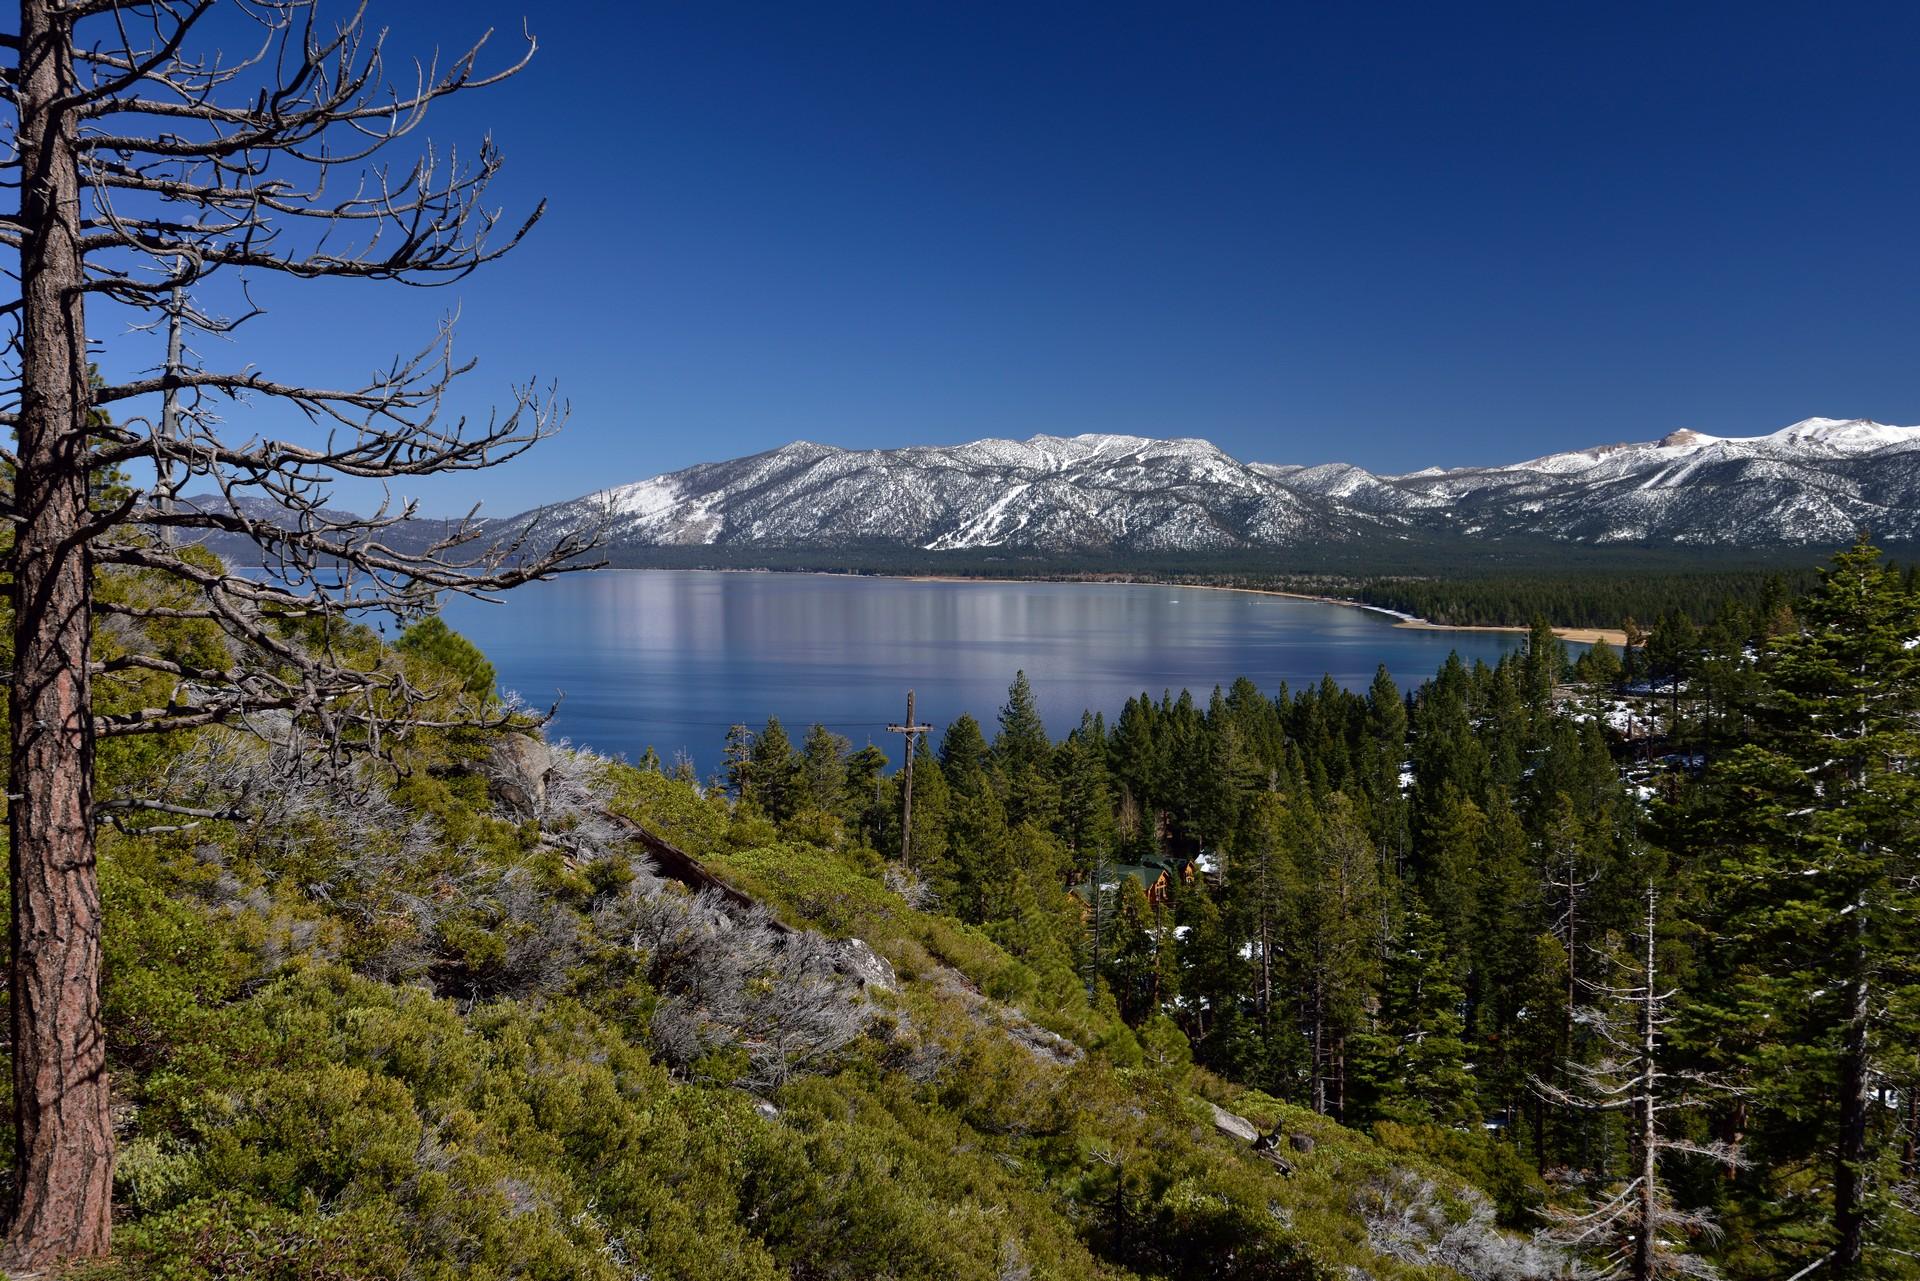 Mountain range near South Lake Tahoe on a clear sky day